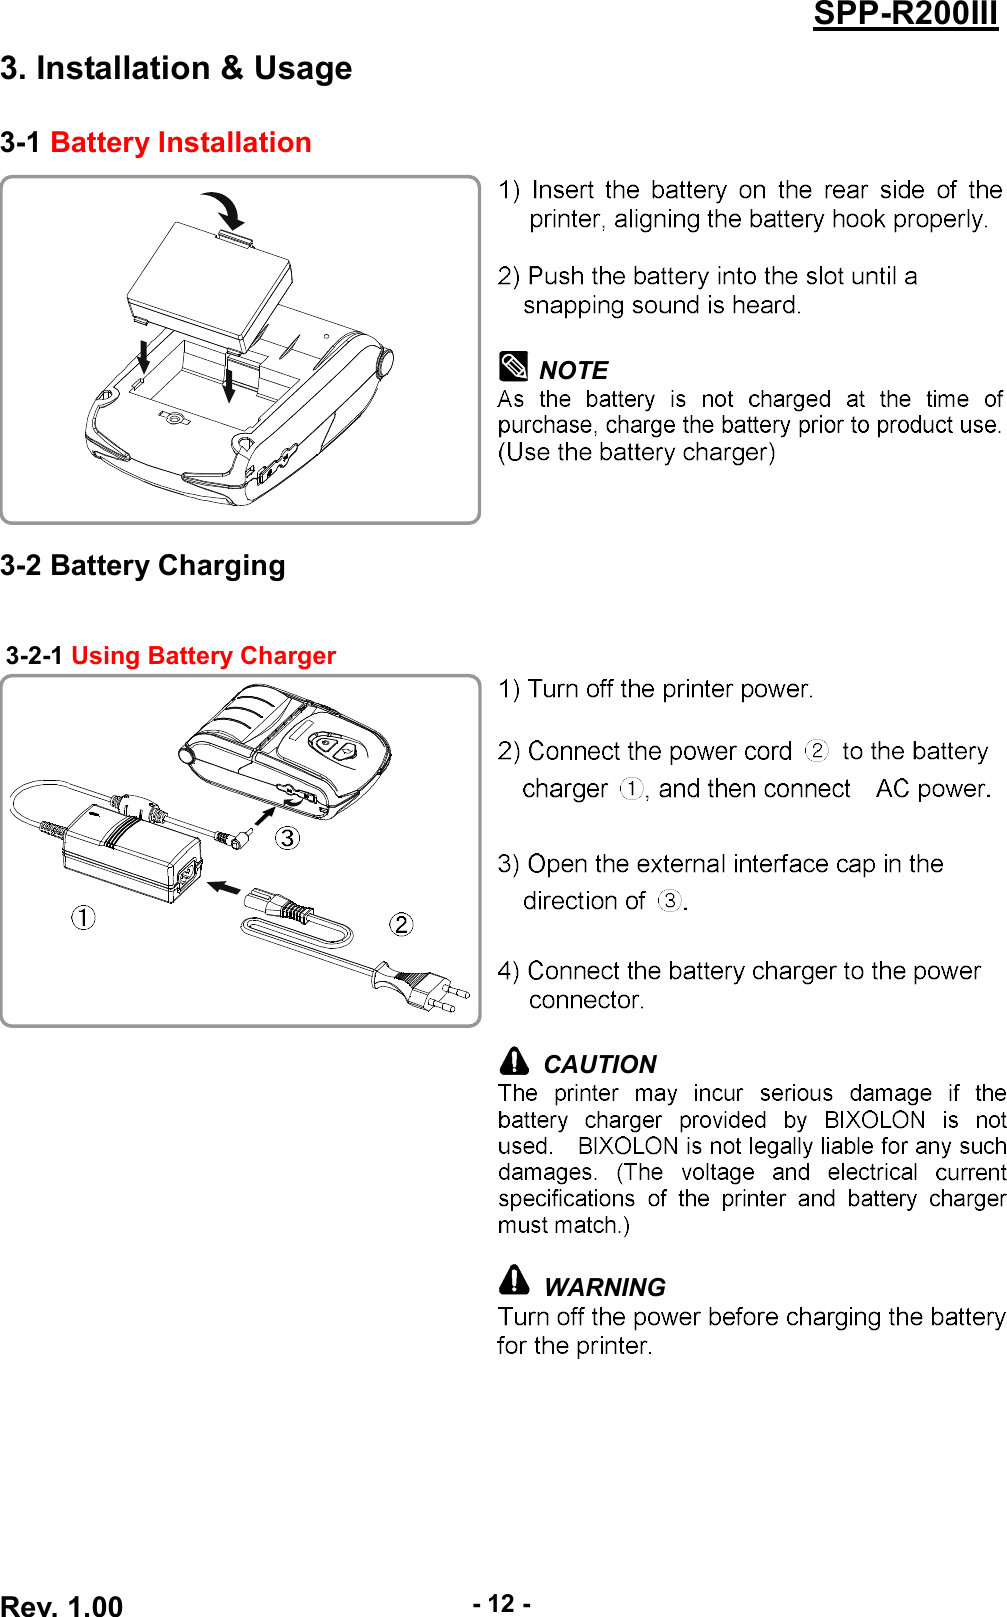 Rev. 1.00-12-SPP-R200III3. Installation &amp; Usage3-1 Battery InstallationNOTE3-2 Battery Charging3-2-1 Using Battery ChargerCAUTIONWARNING